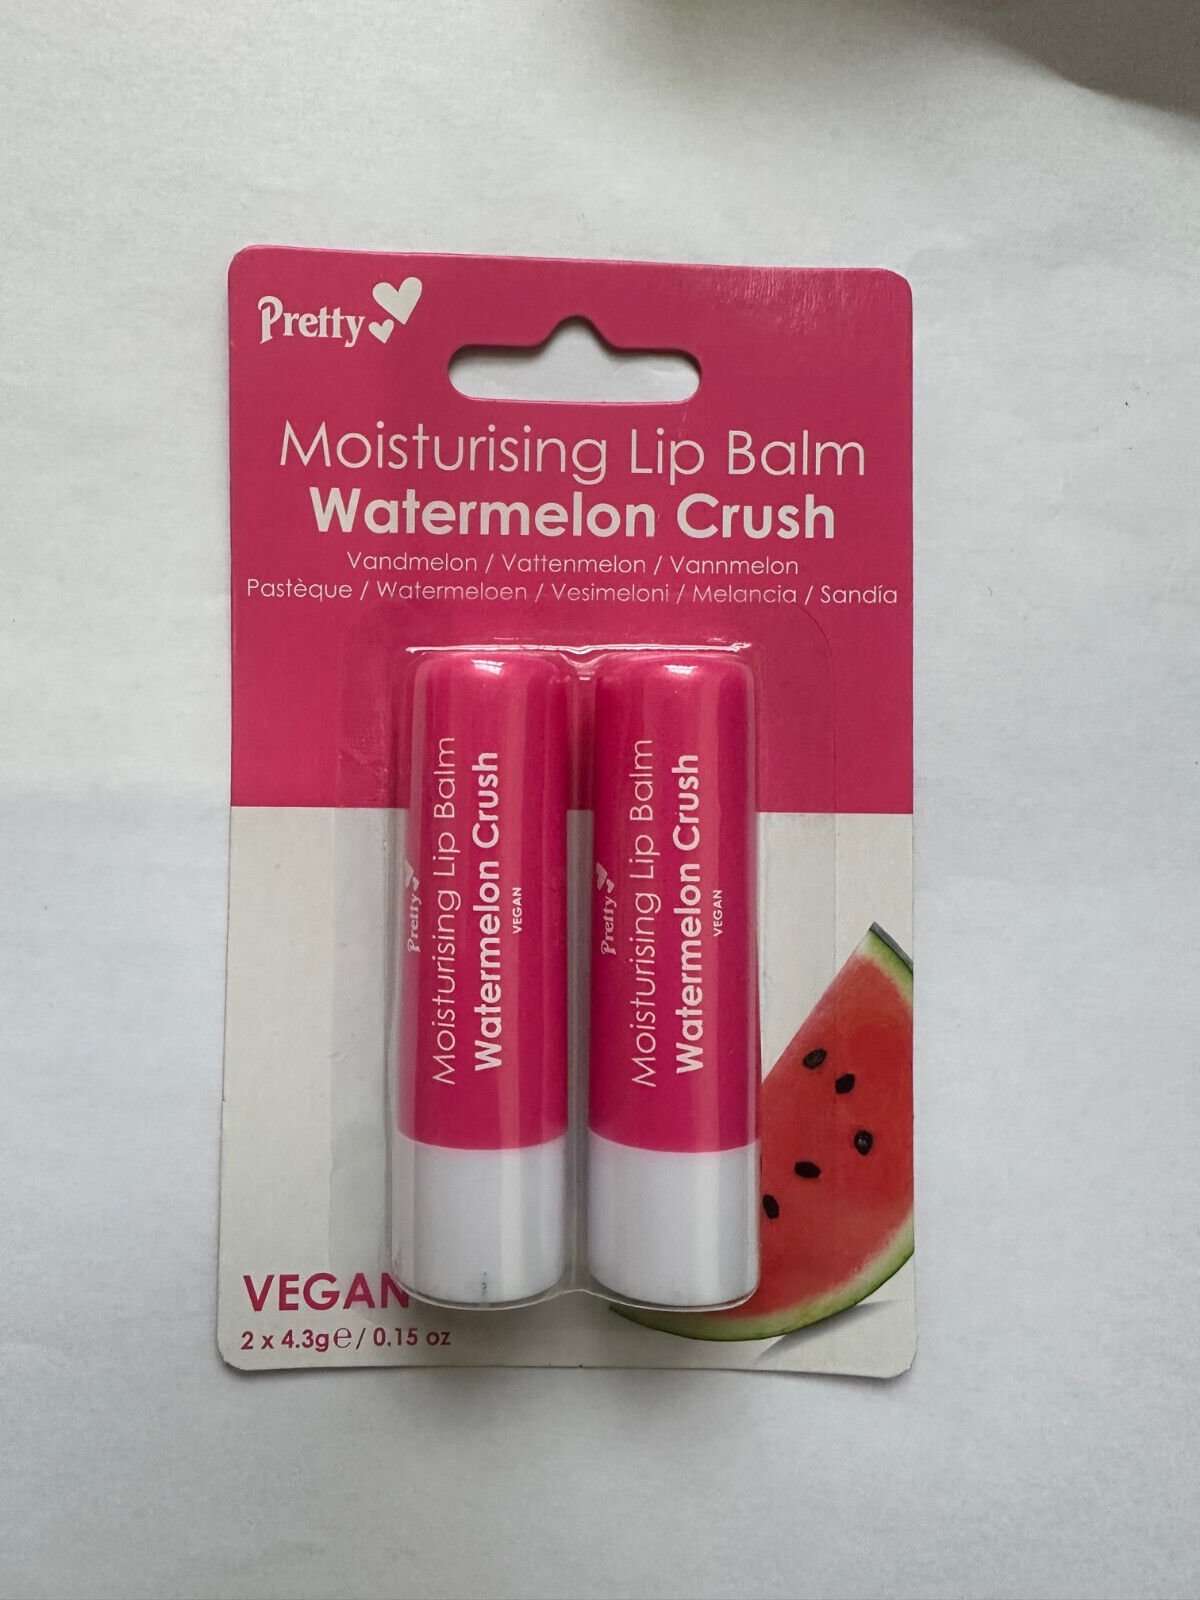 Pretty Moisturising Watermelon Crush Lip Balm 4.3g